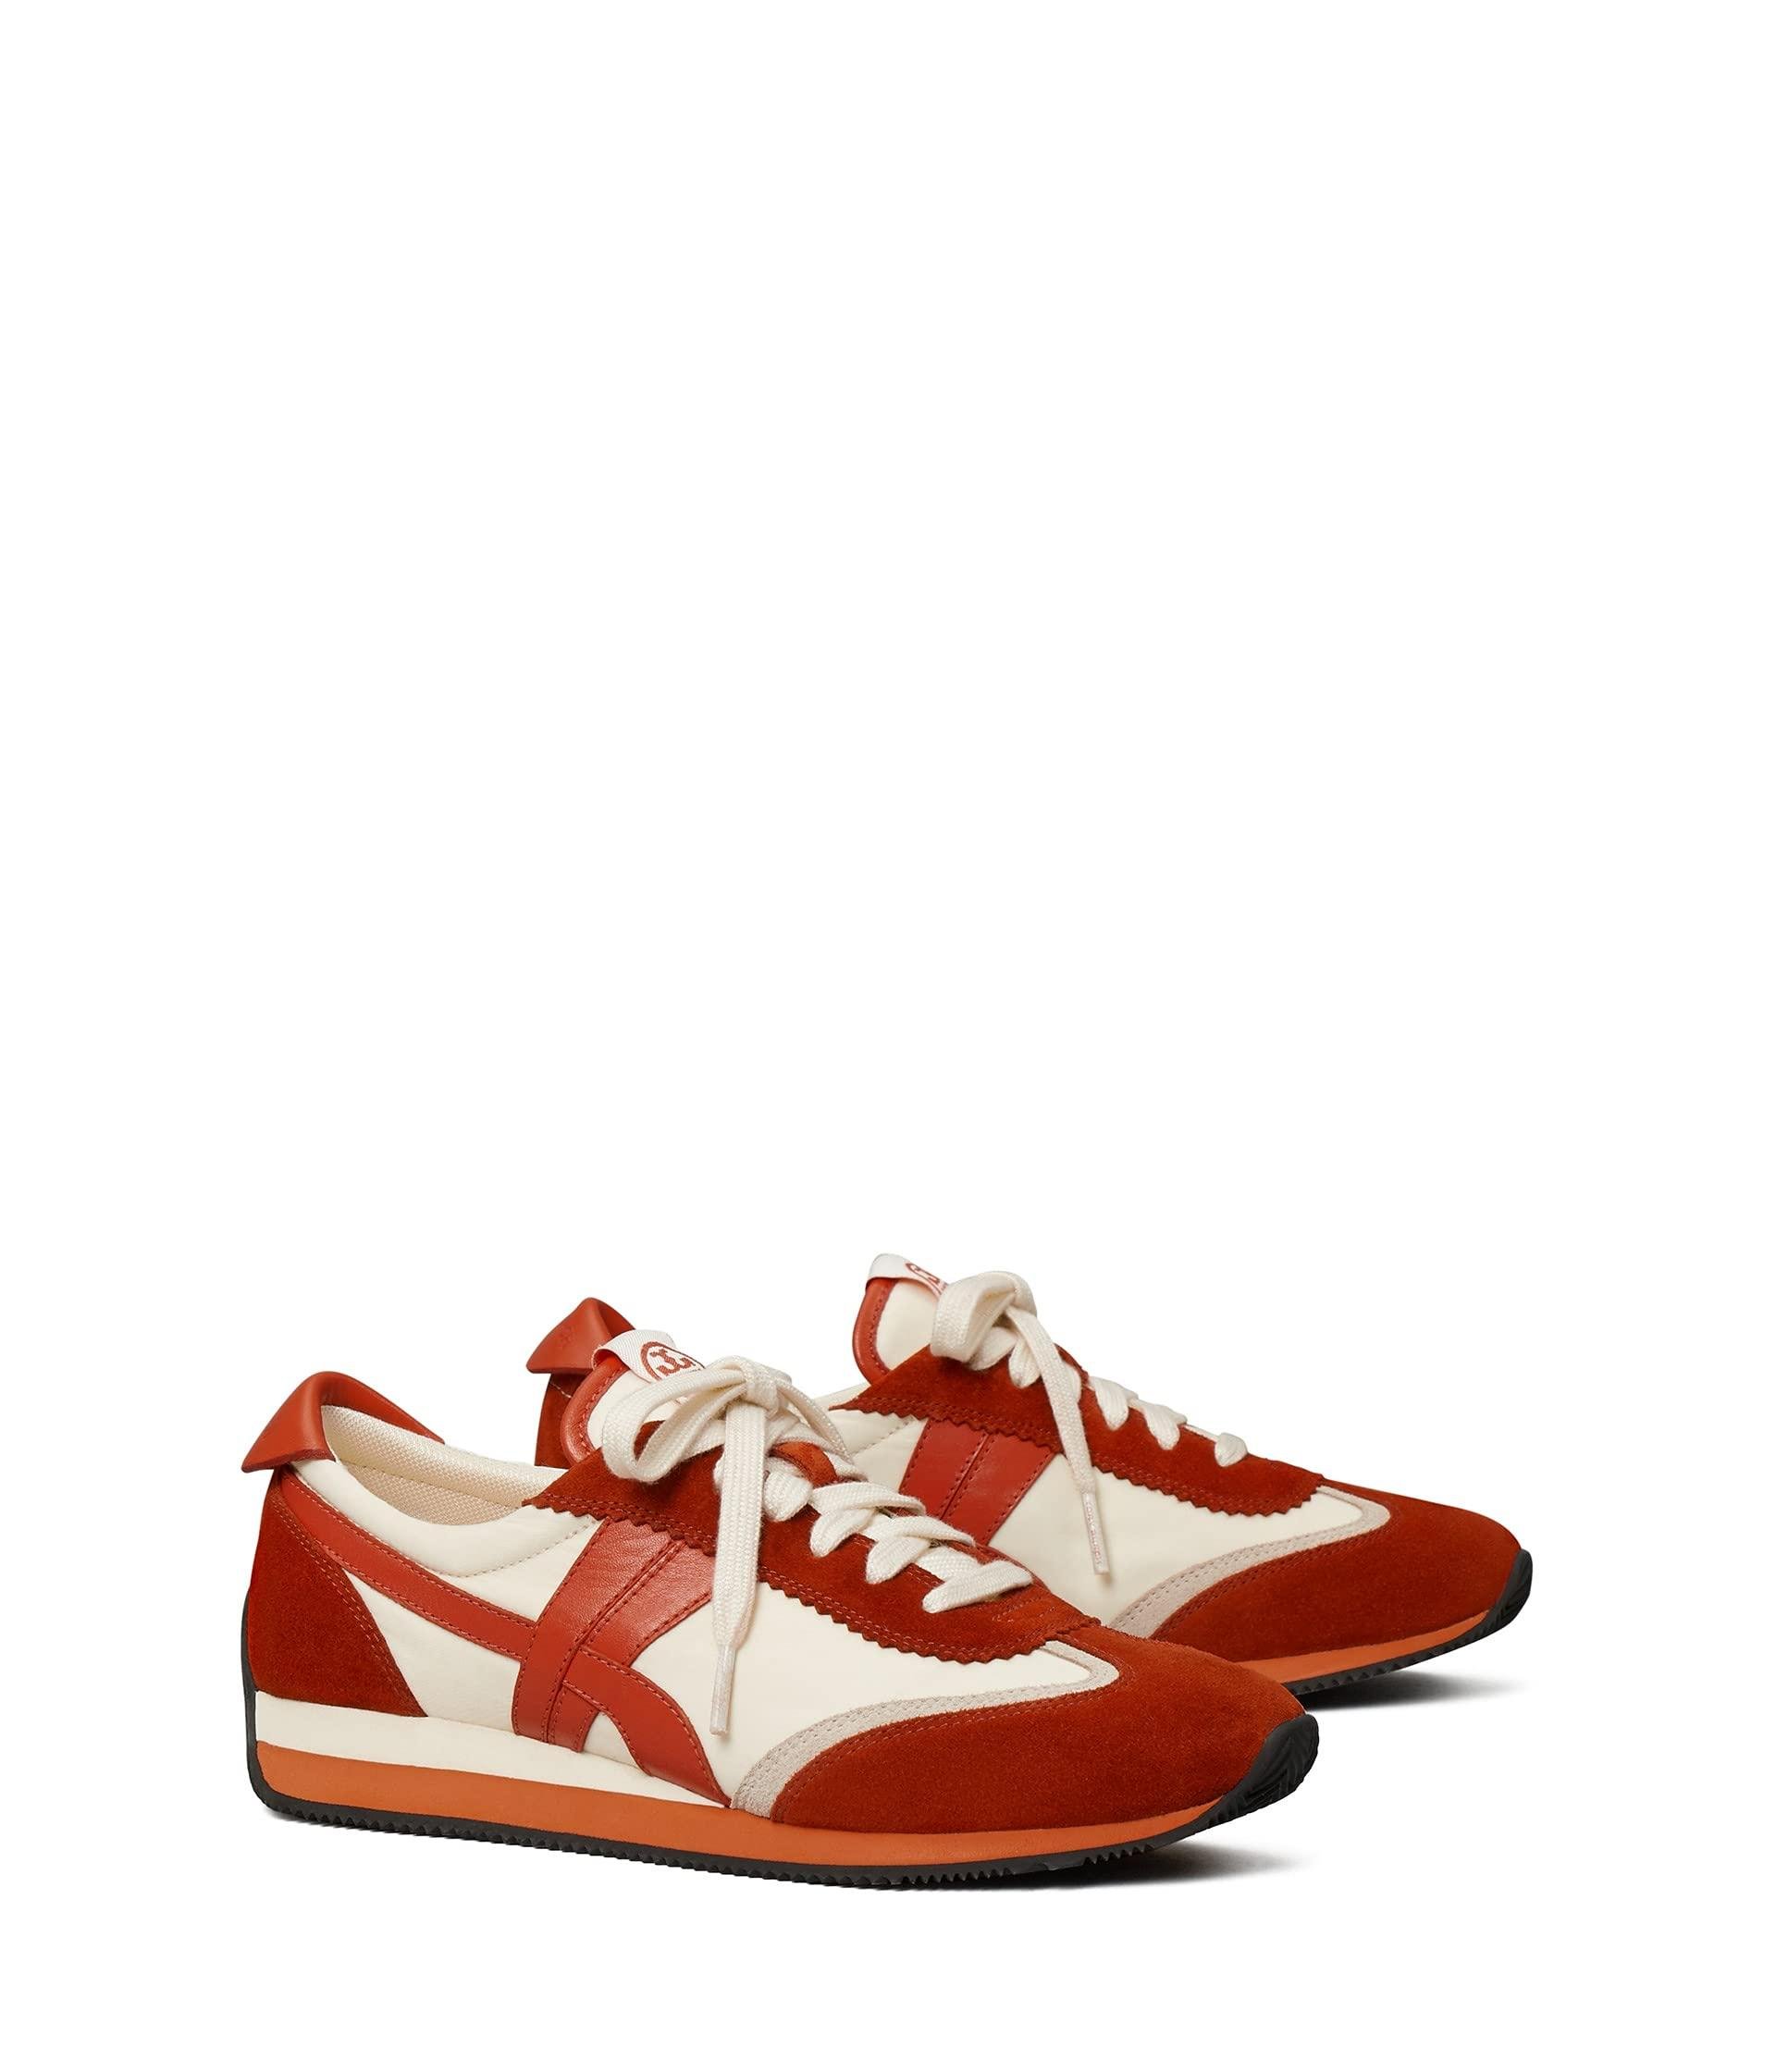 Tory Burch Leather Hank Sneaker in Red | Lyst